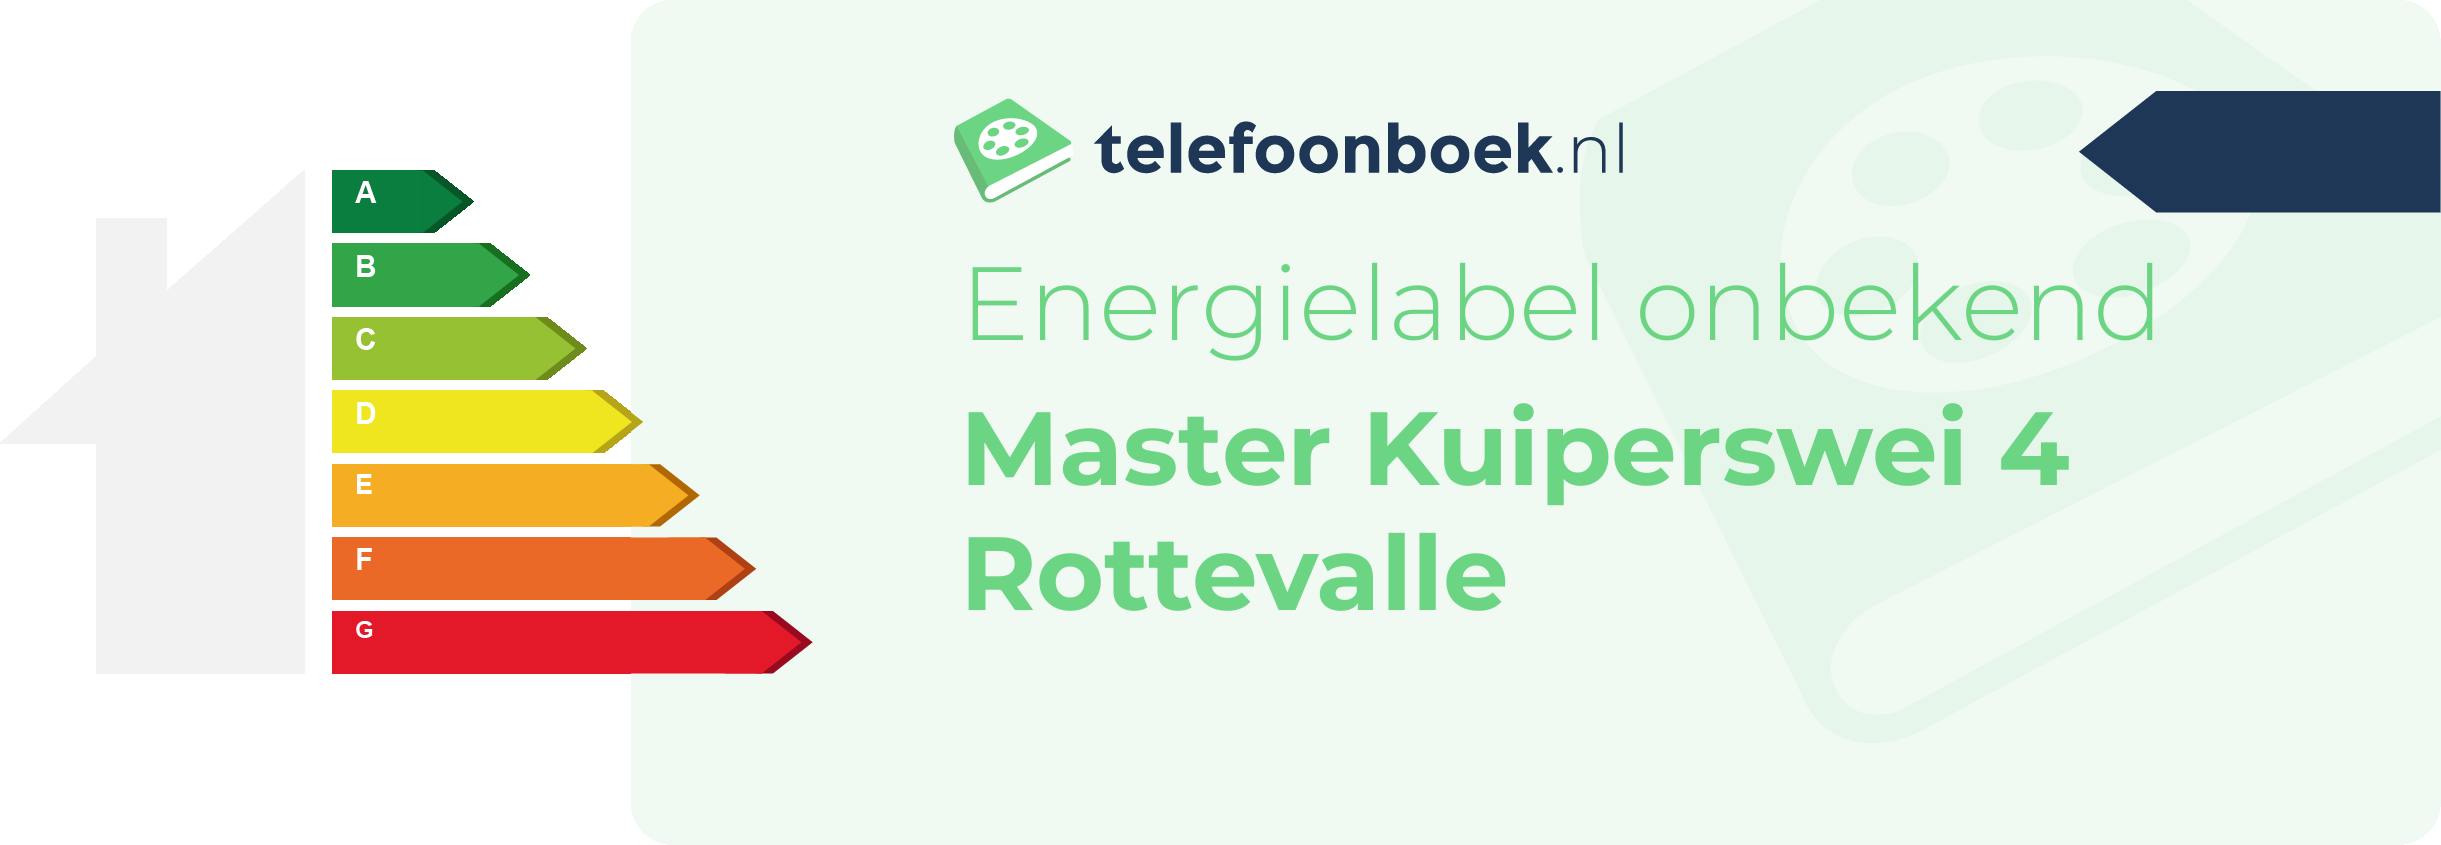 Energielabel Master Kuiperswei 4 Rottevalle